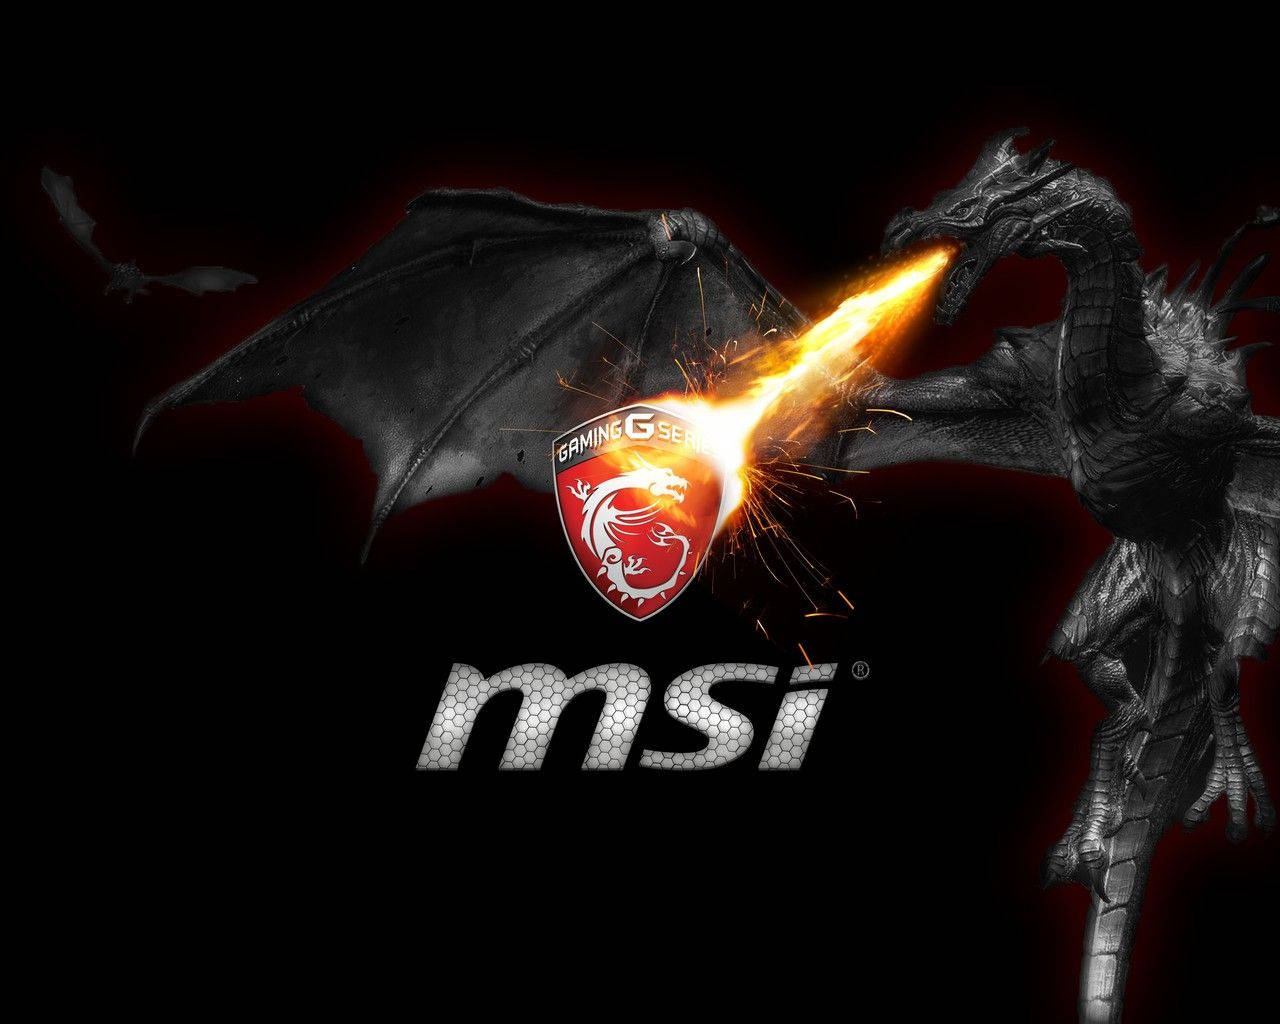 Msi Gaming G Series Logo Dragon Fire Background